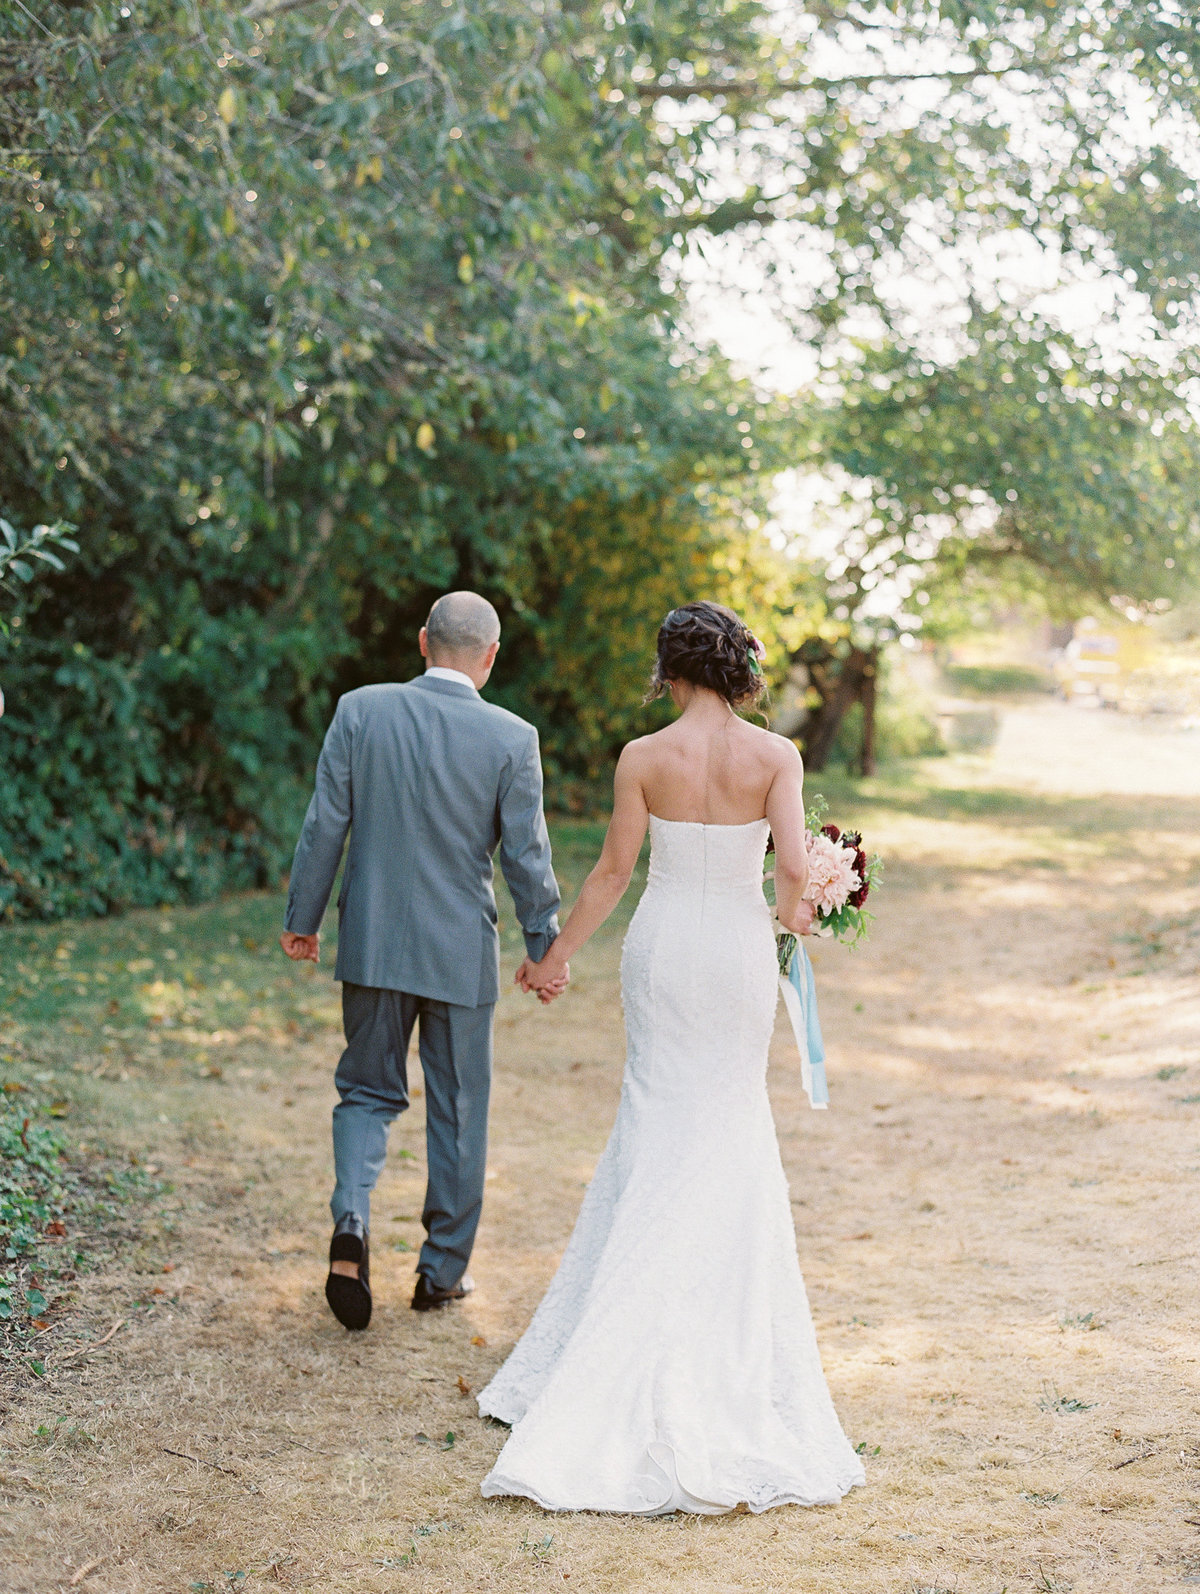 Bride and groom walking destination wedding © Bonnie Sen Photography